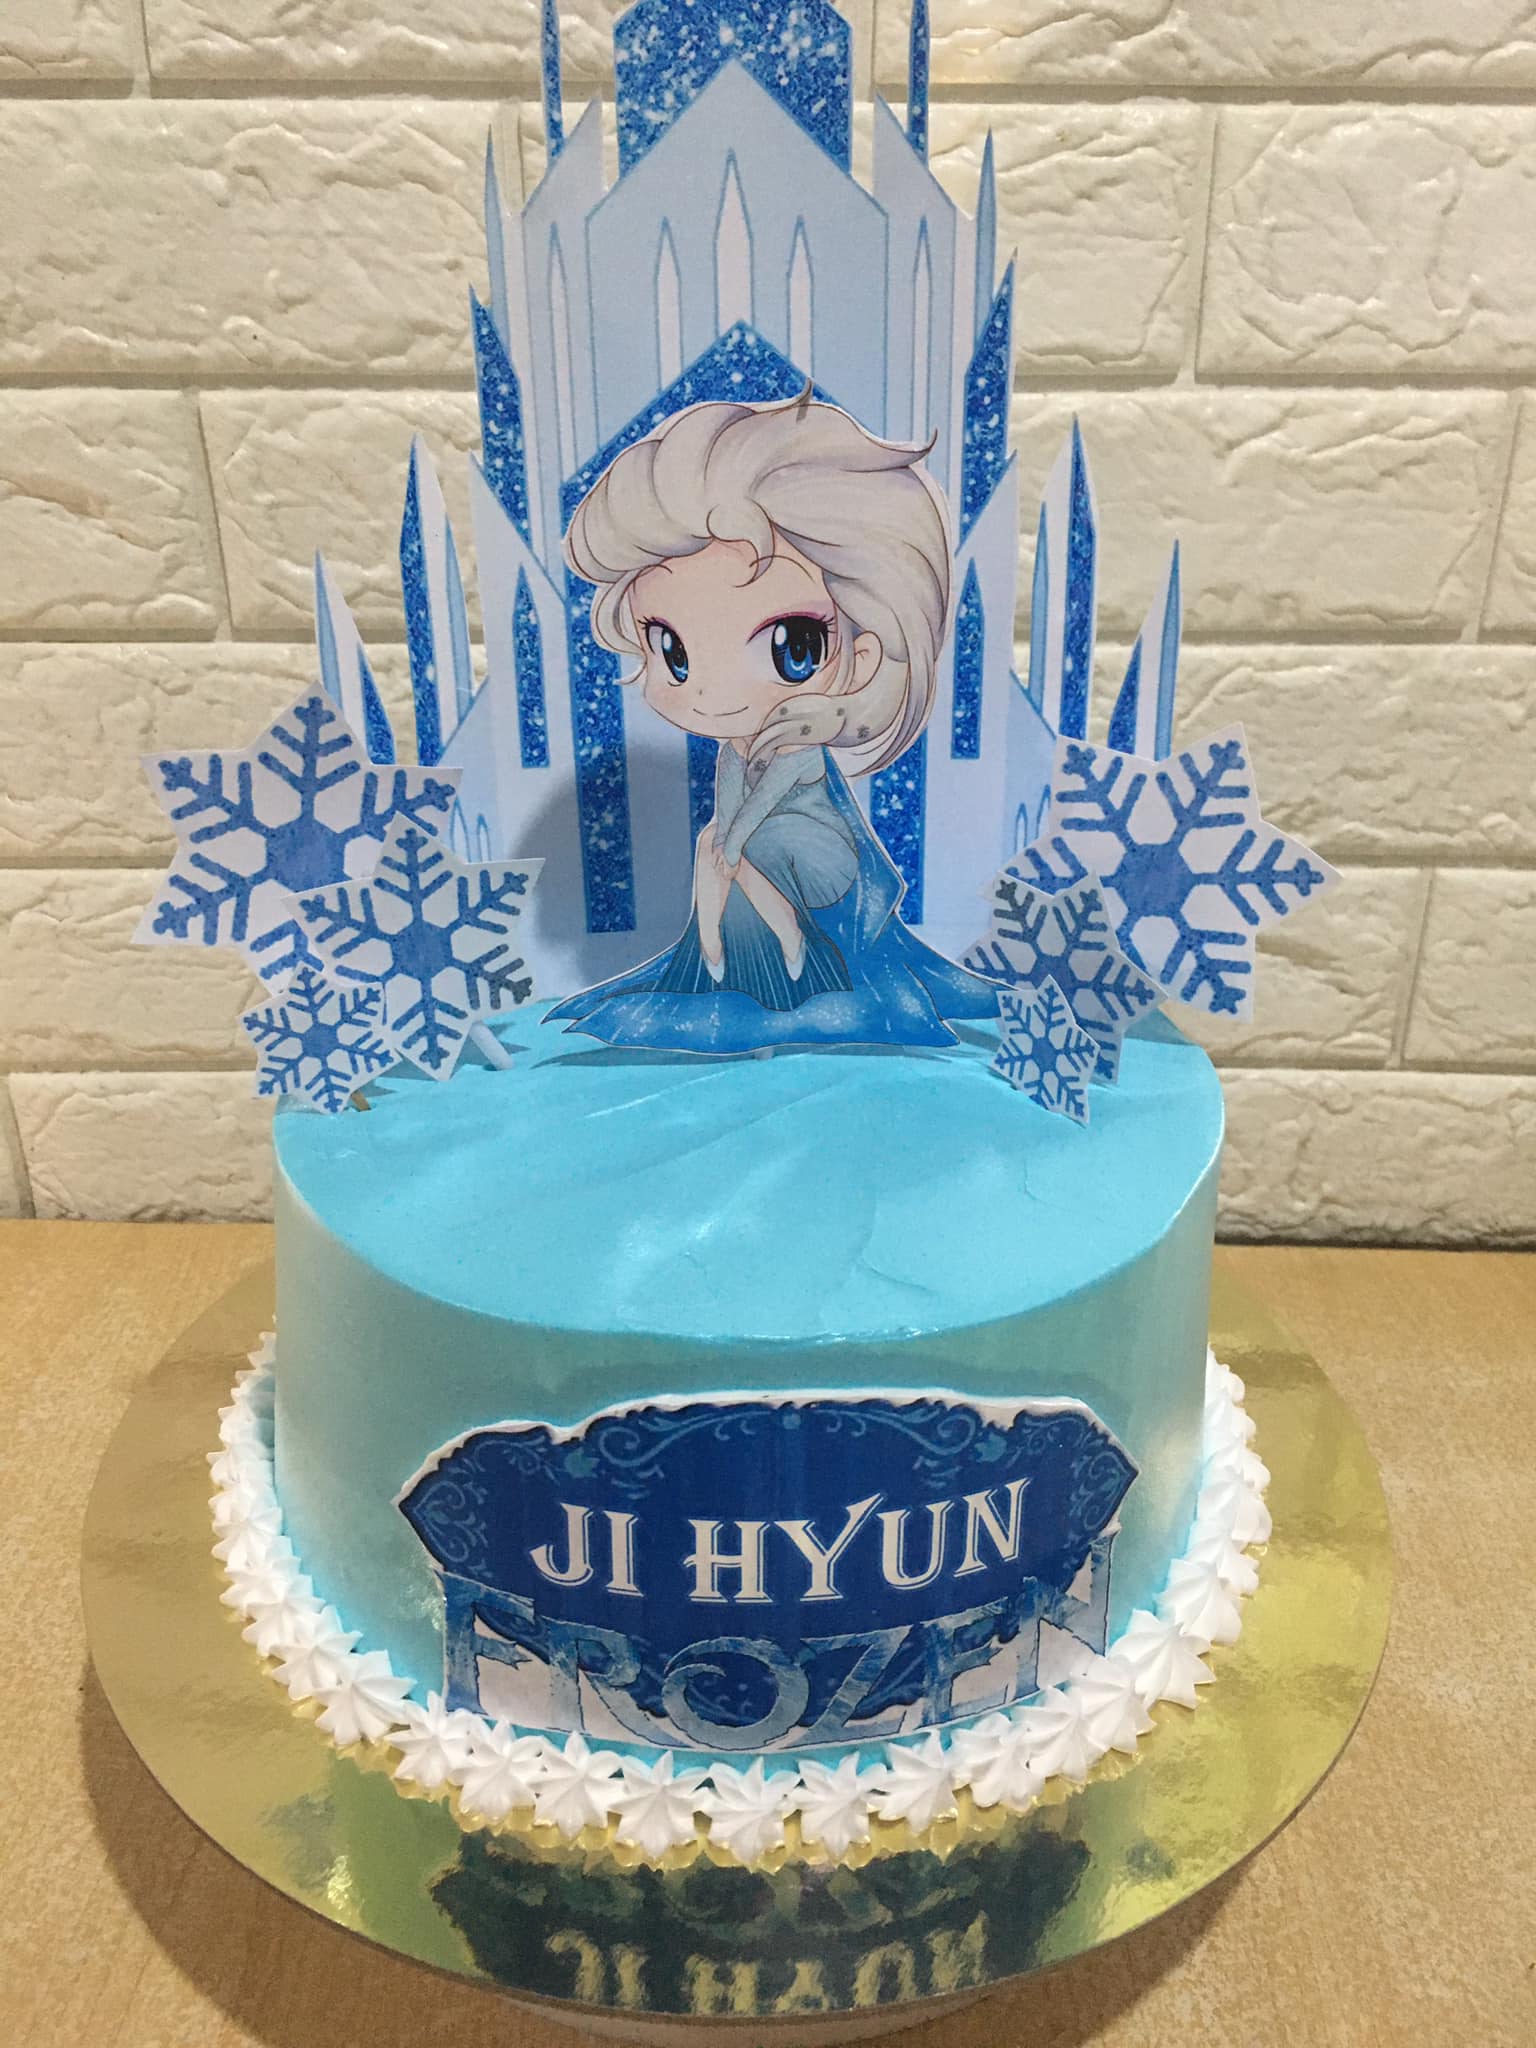 Winter Wonderland Cake Kit - A Frozen Princess's Dream! – Clever Crumb-mncb.edu.vn